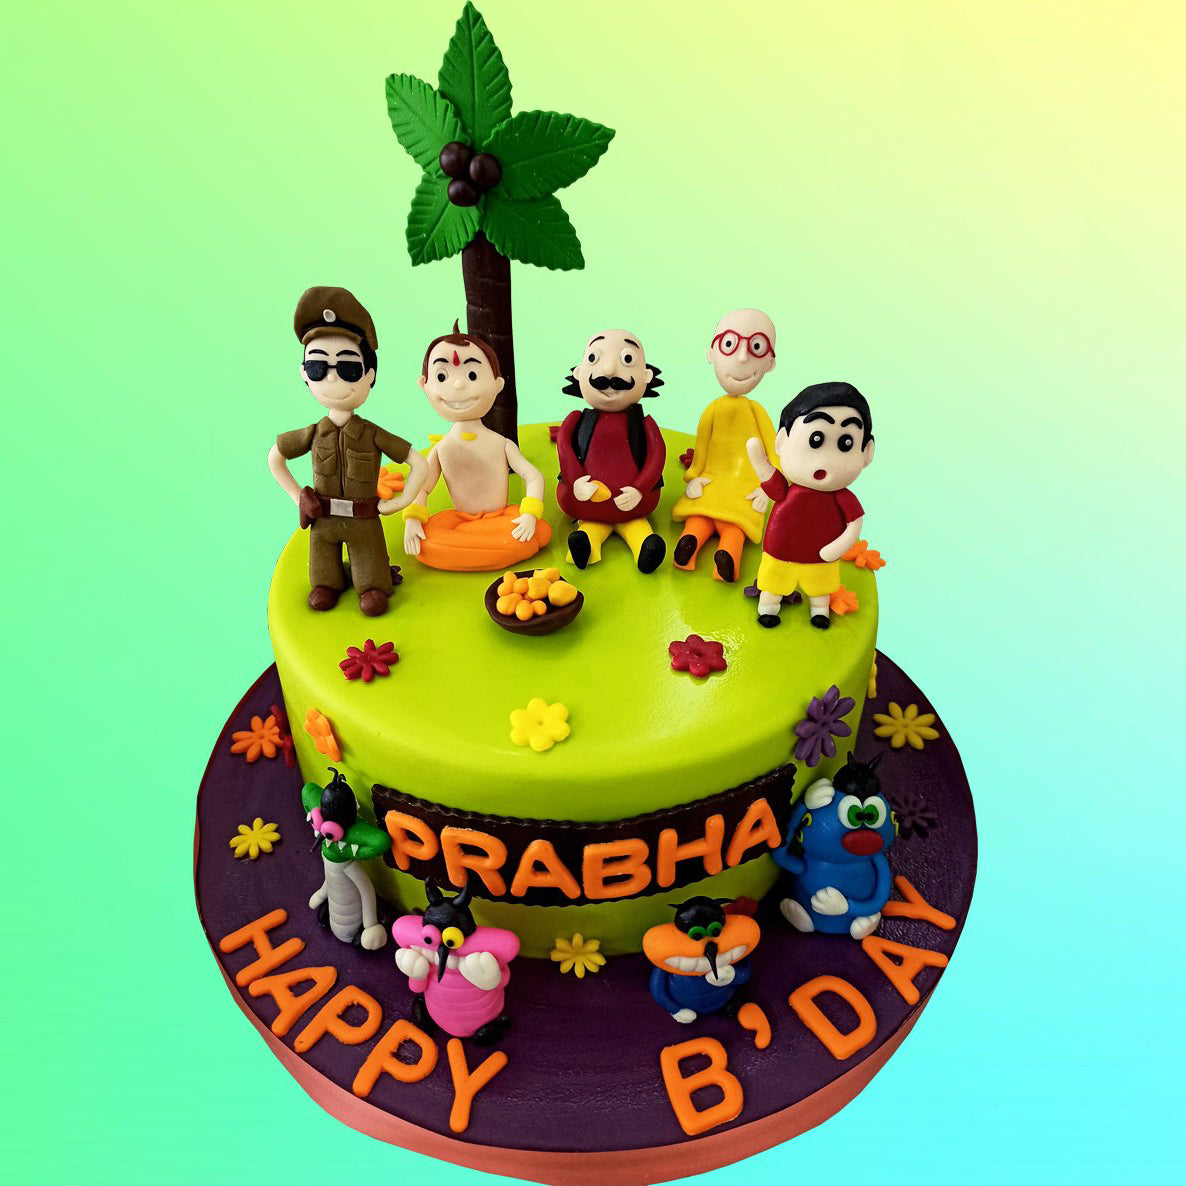 Birthday prank cake decoration idea|birthday decoration|Prank cake|गंजी से  Cake बनाया|Fake cake - YouTube